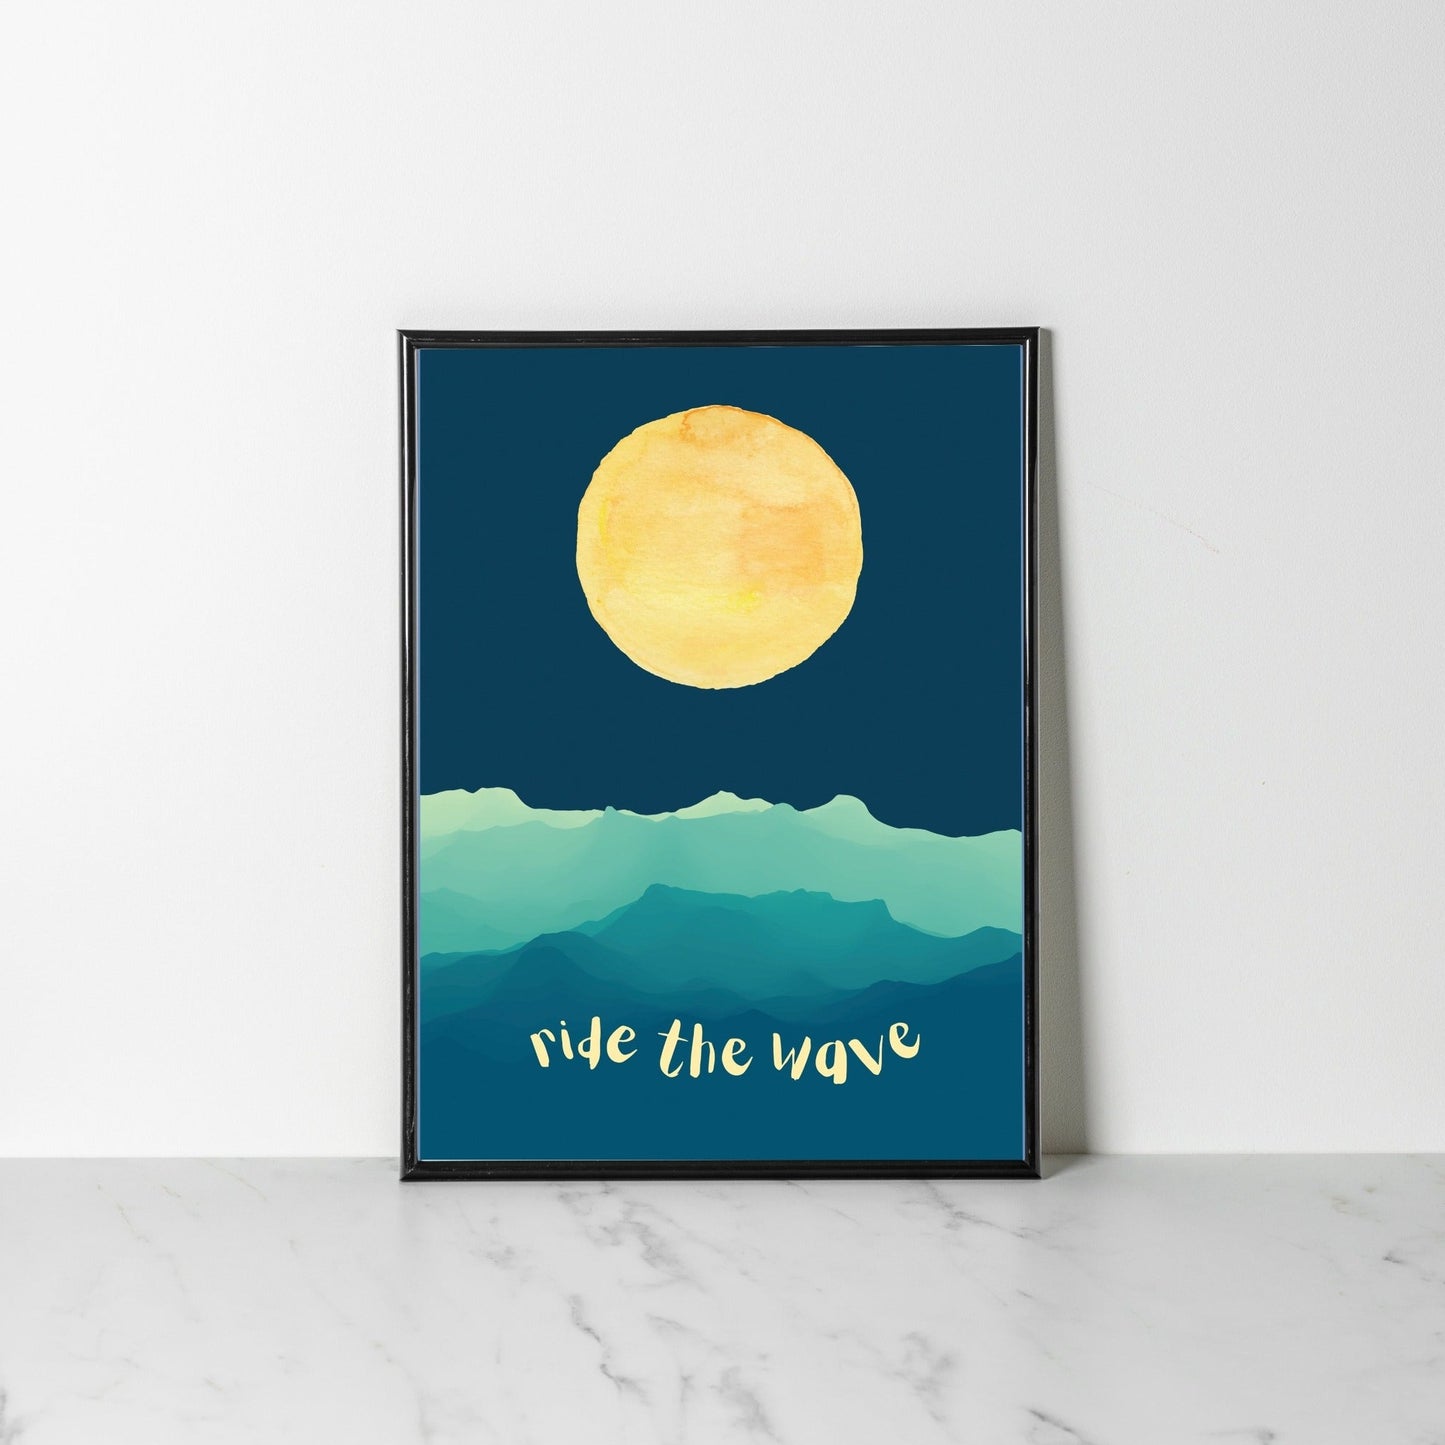 Ride The Wave Art Print - Moon Over The Sea - Home Decor - Wall Art.